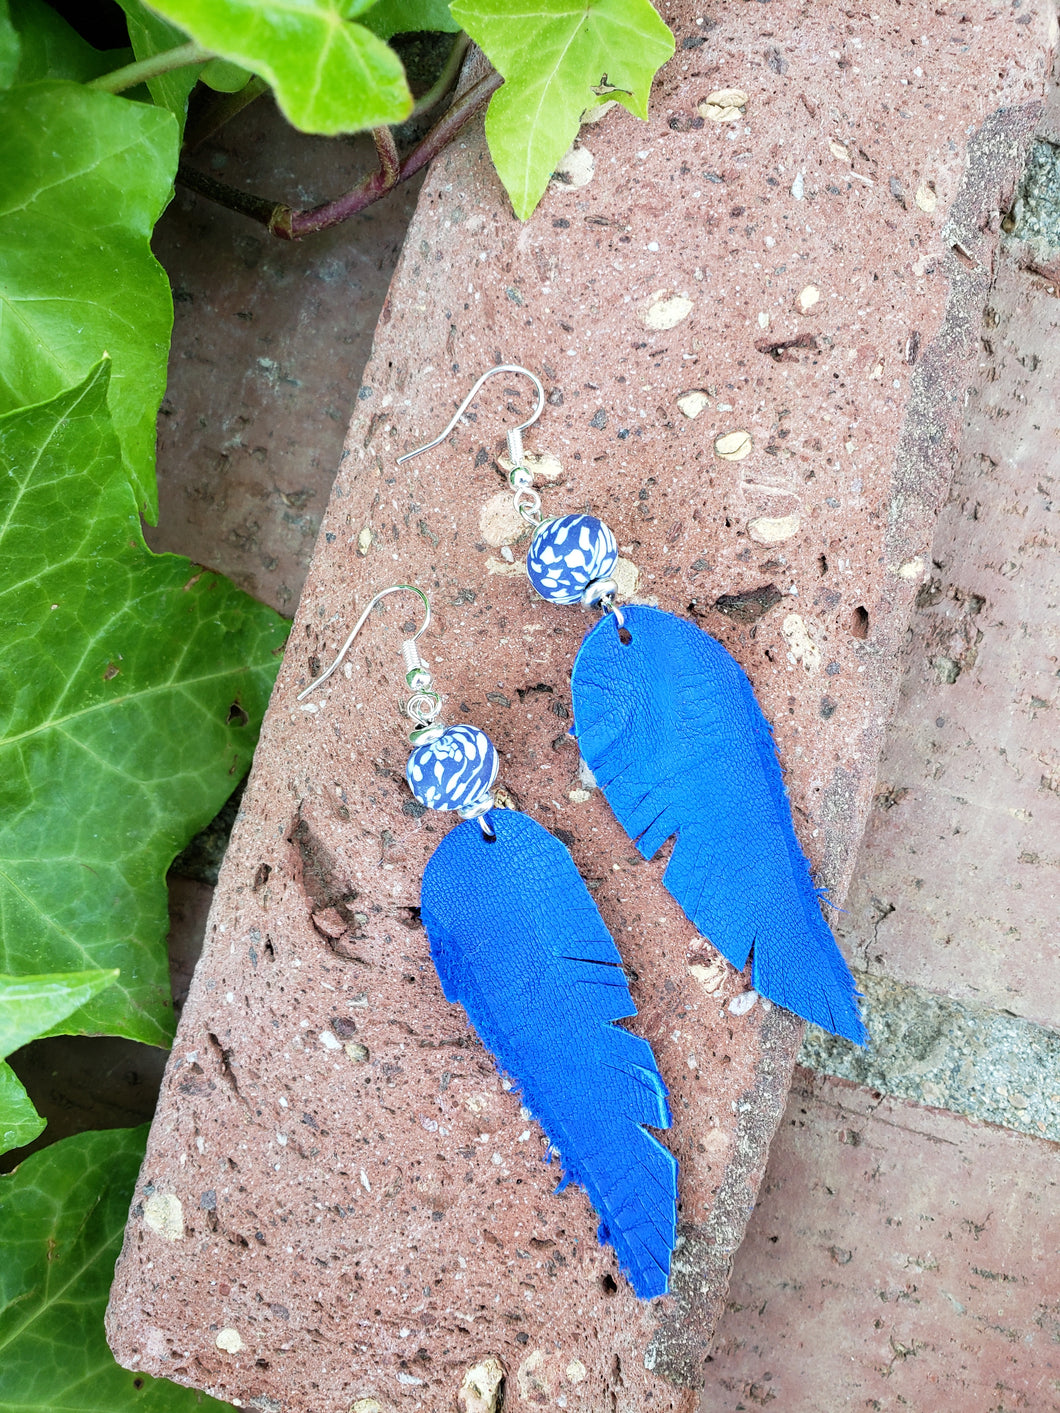 Brilliant blue feather earrings